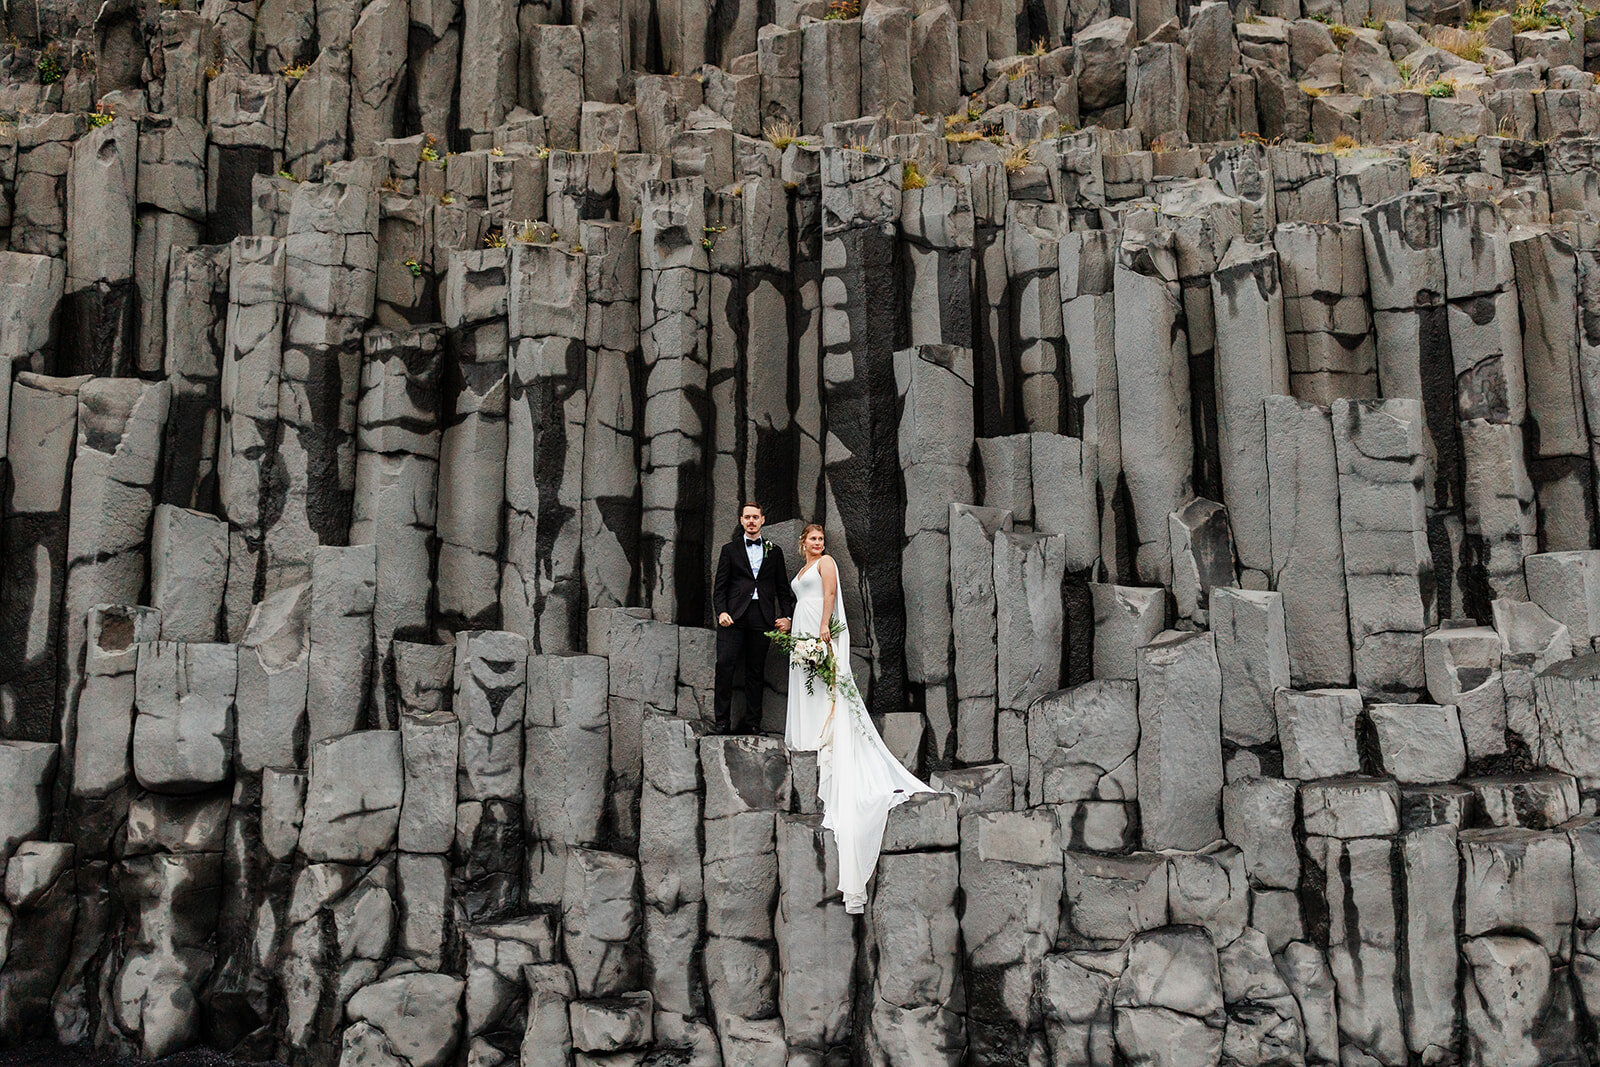 Elpoement Couple standing in a Reynisdrangar rock formation